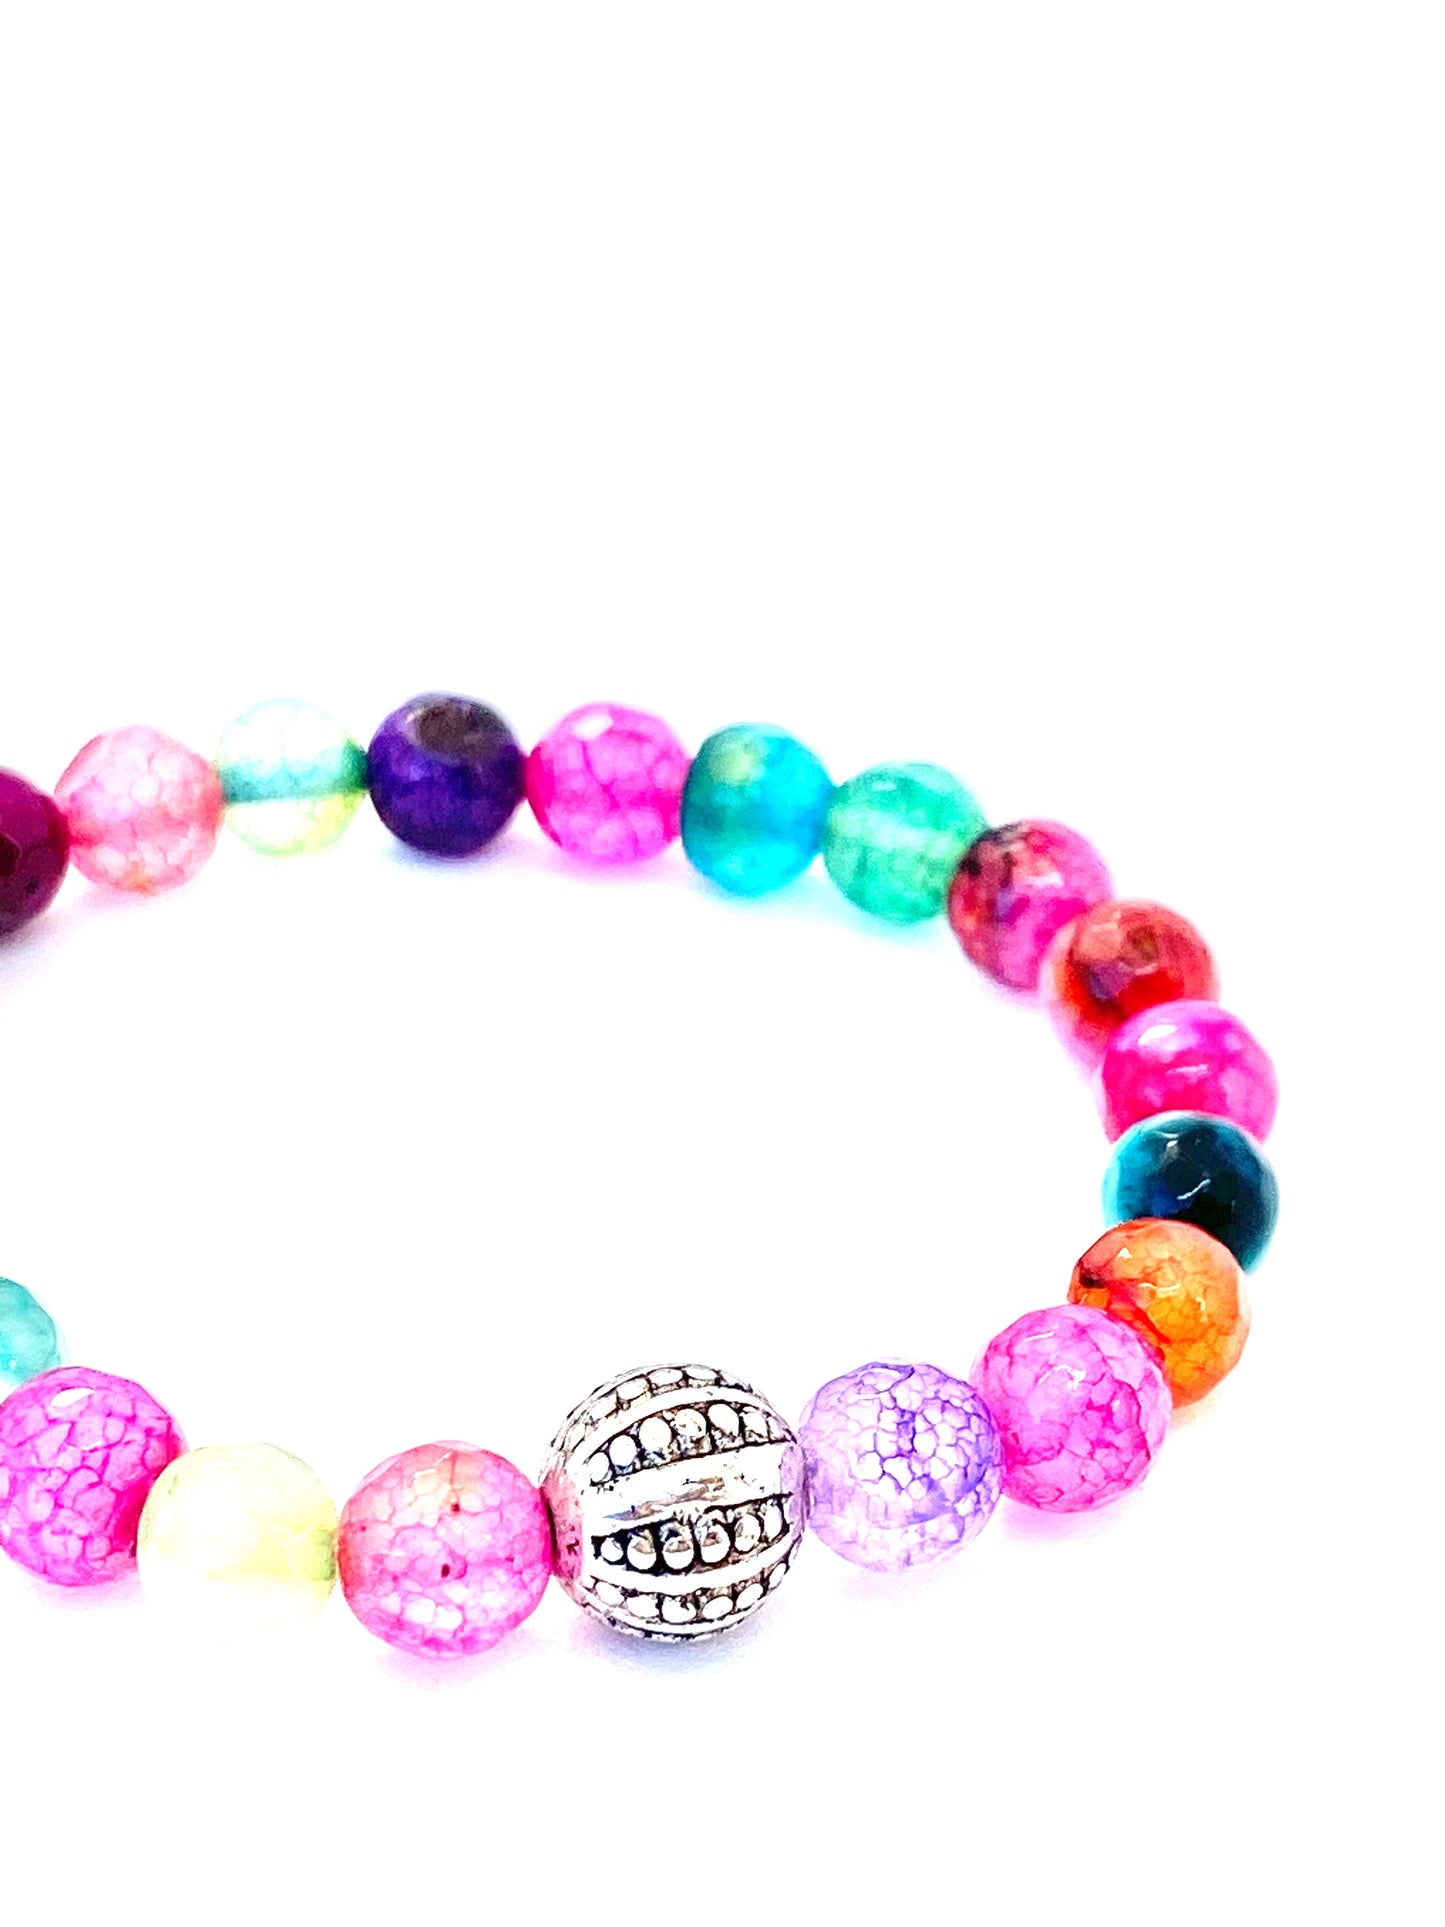 Agate Rainbow Mala Bracelet - Faceted Gemstones